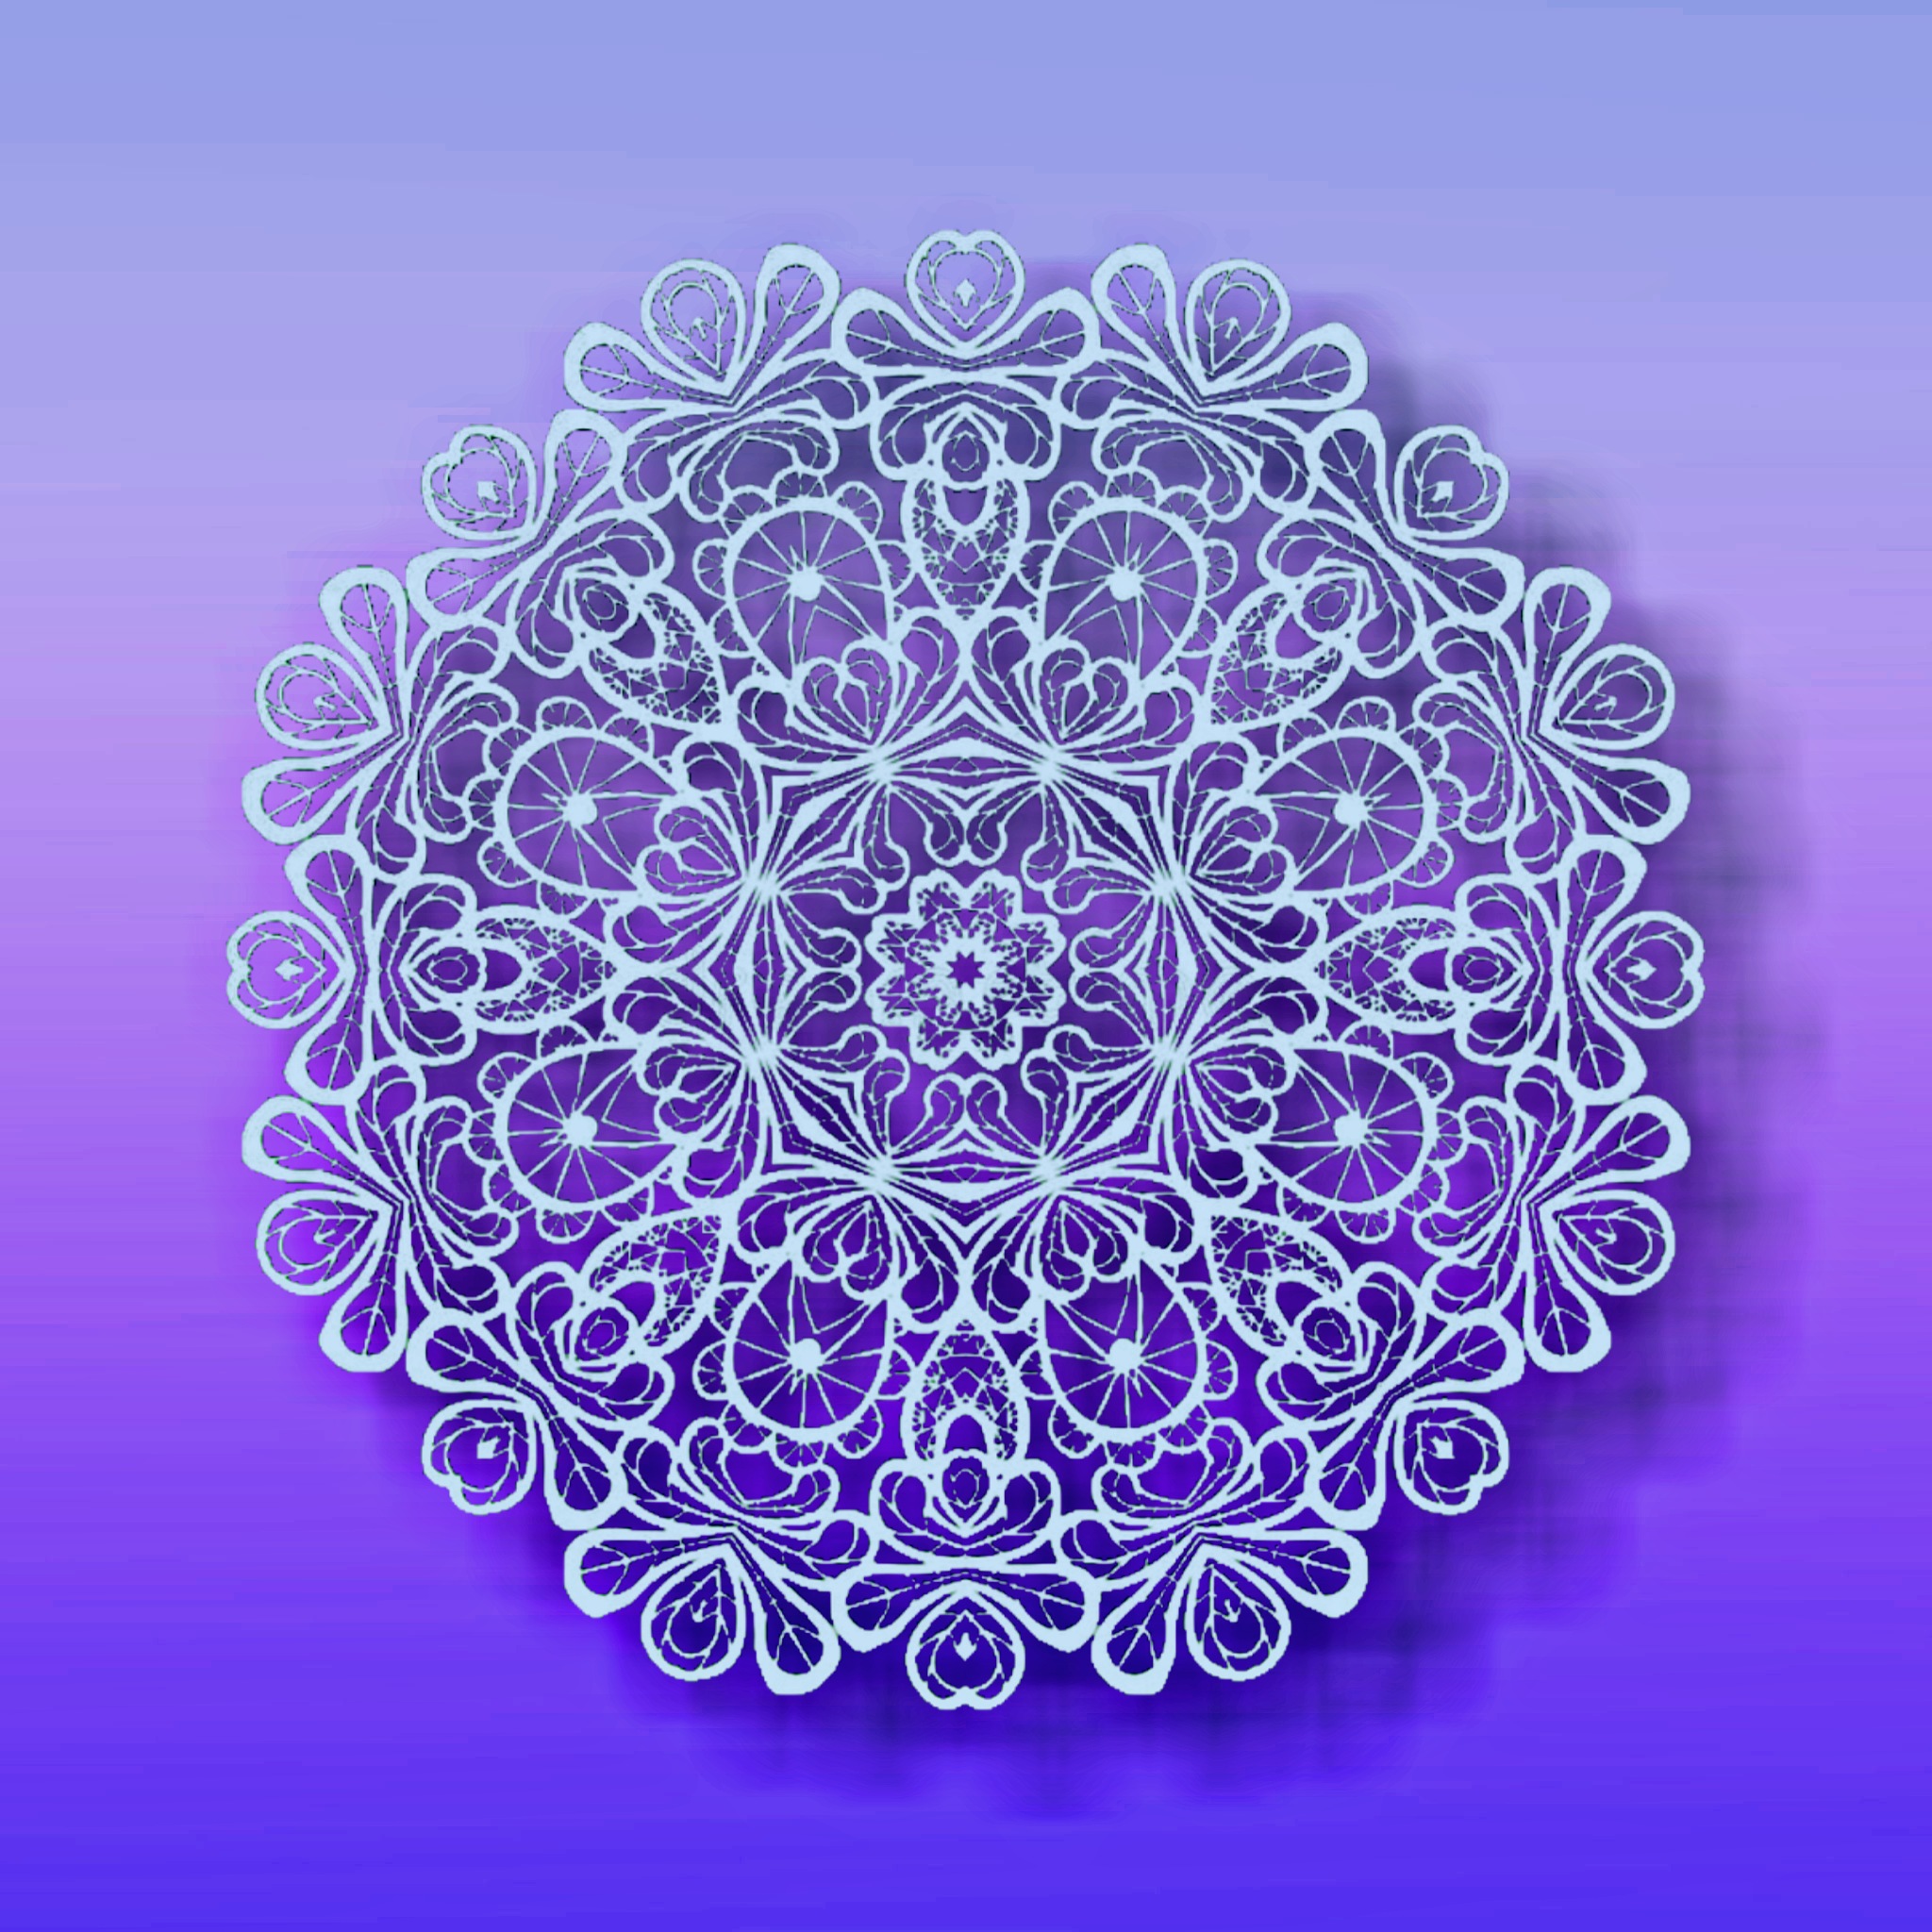 Mandala Design Illustration